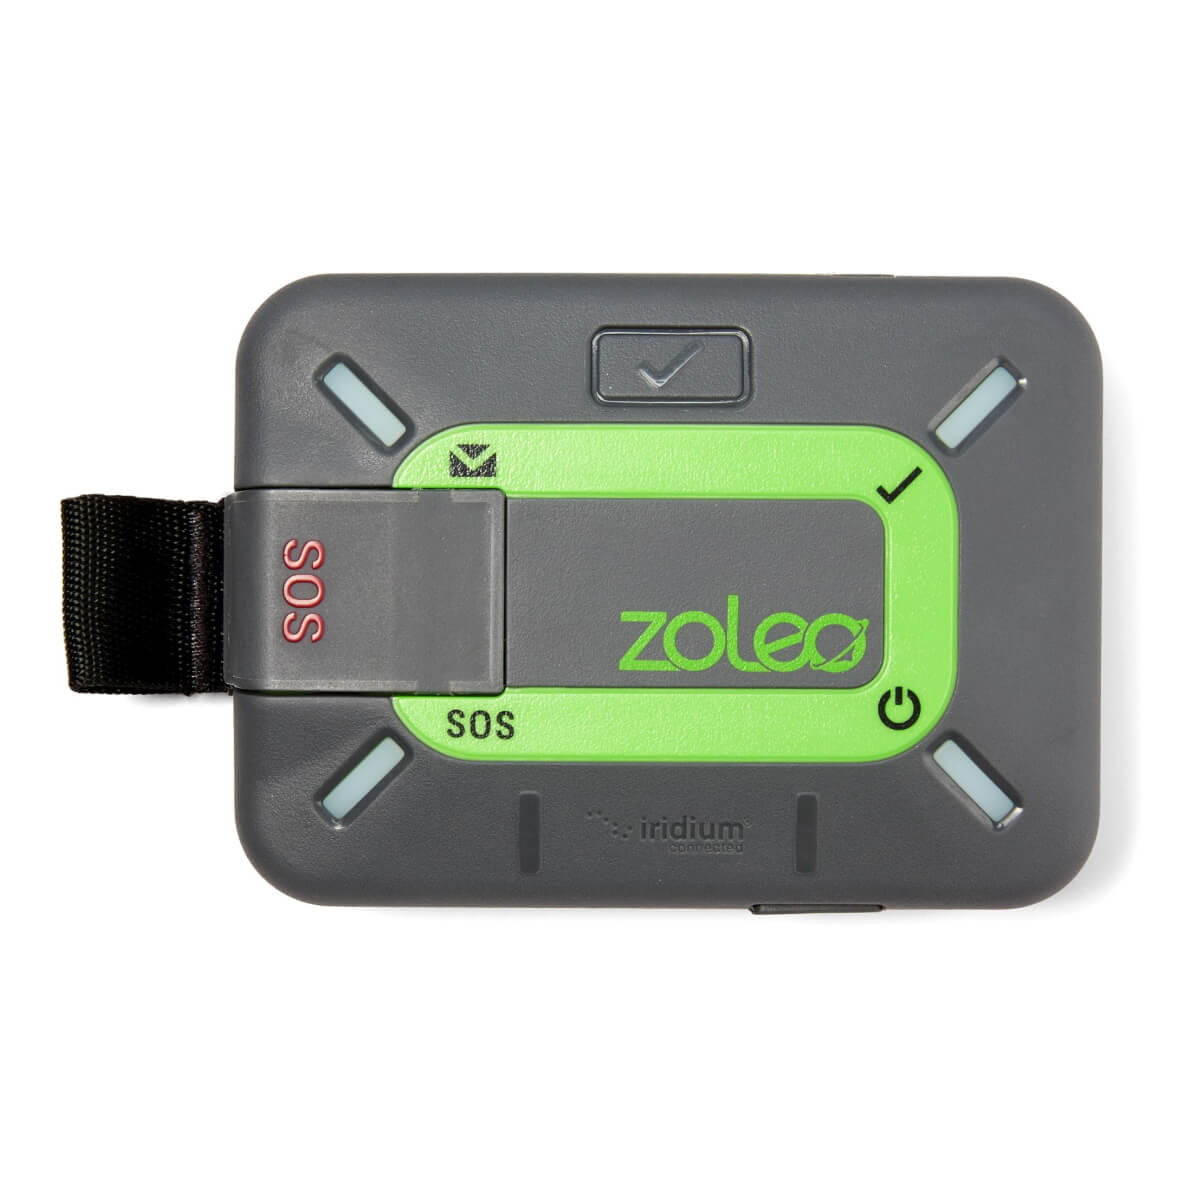 ZOLEO satellite communicator as a safety gift